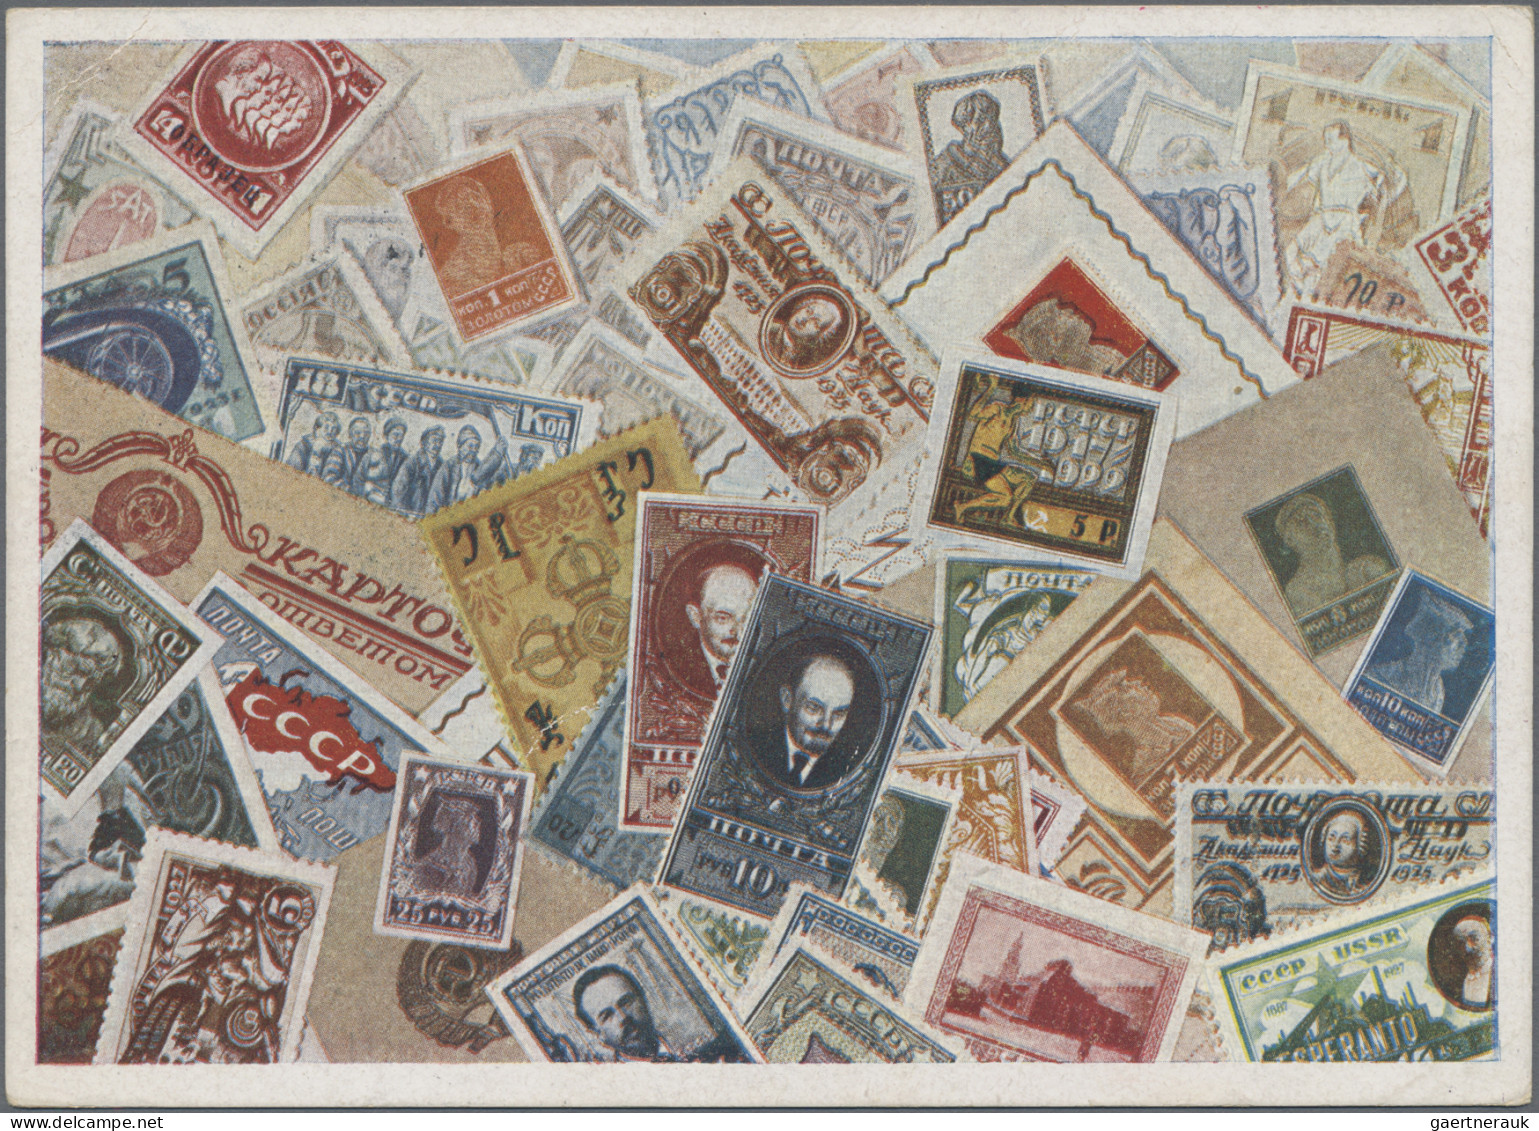 Zeppelin Mail - Germany: 1931, Polarfahrt, UdSSR-Post, Ungezähnter Satz (Mi.Nr.4 - Correo Aéreo & Zeppelin